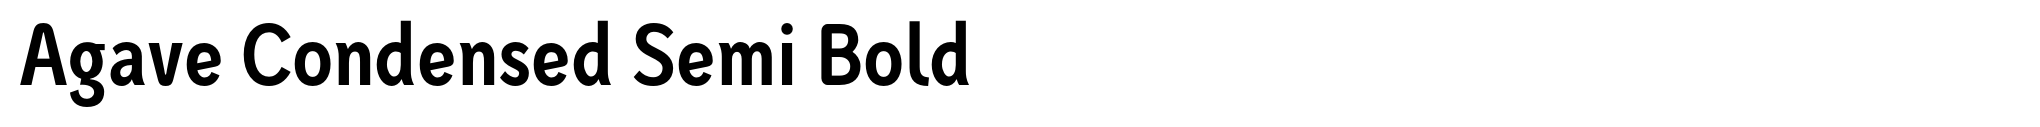 Agave Condensed Semi Bold image